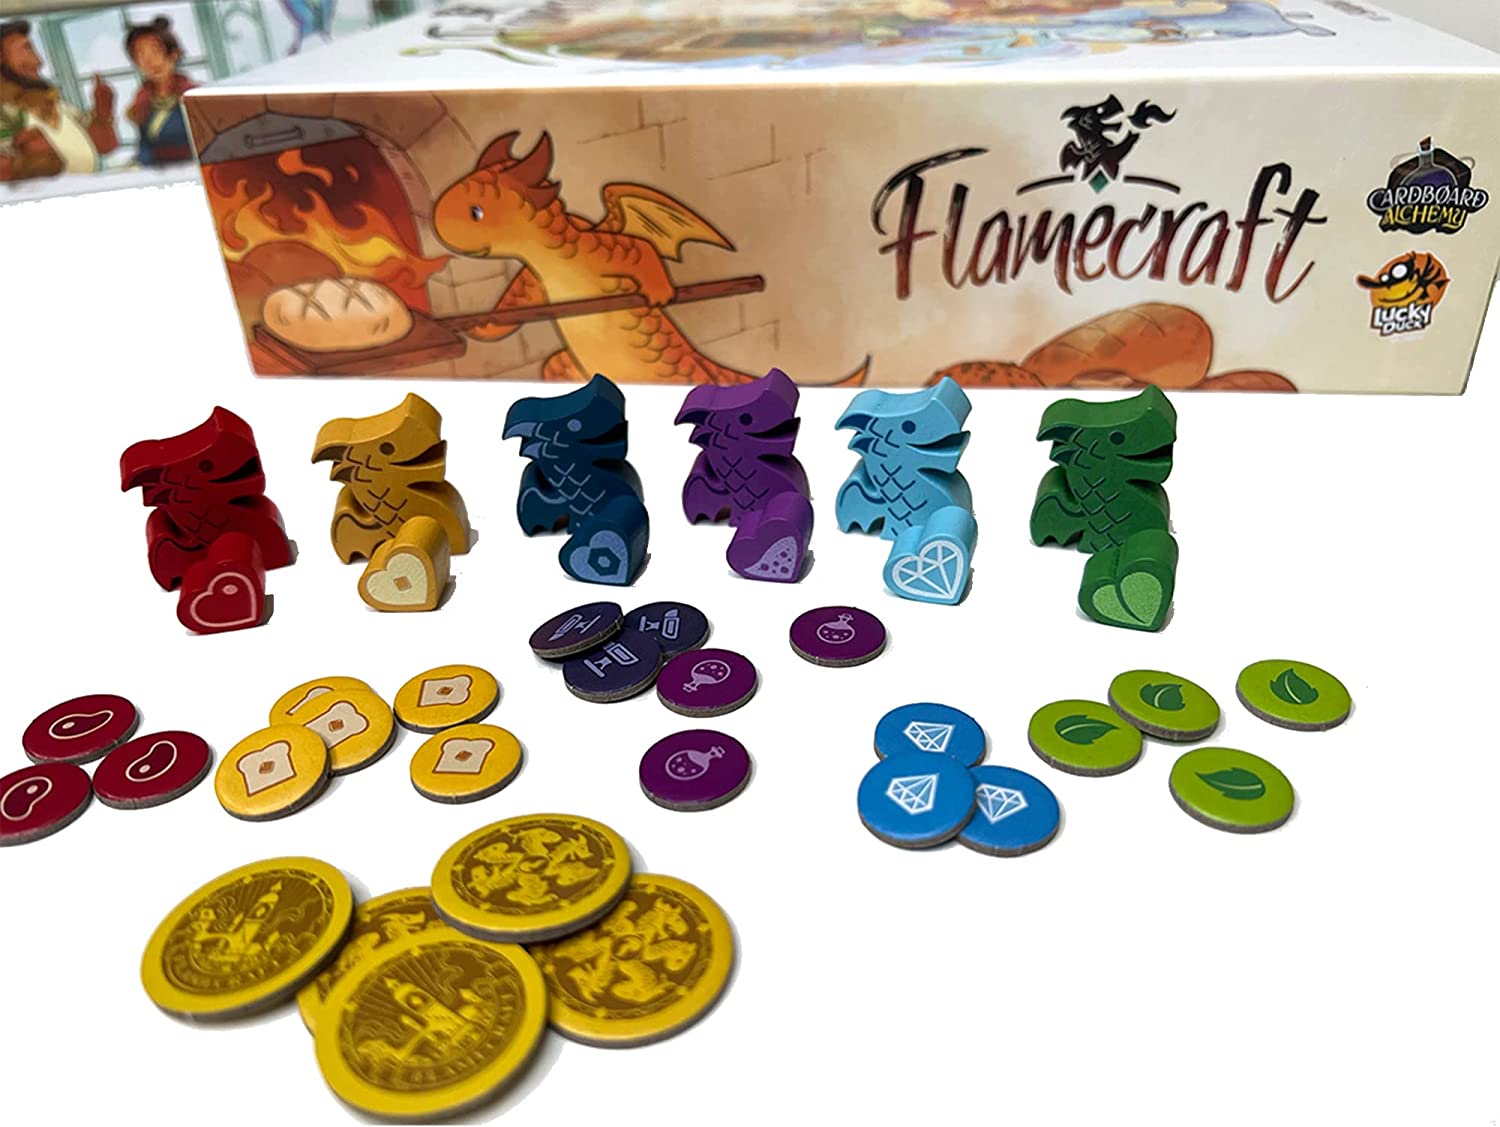 Flamecraft Board game box art cute dragons meeples